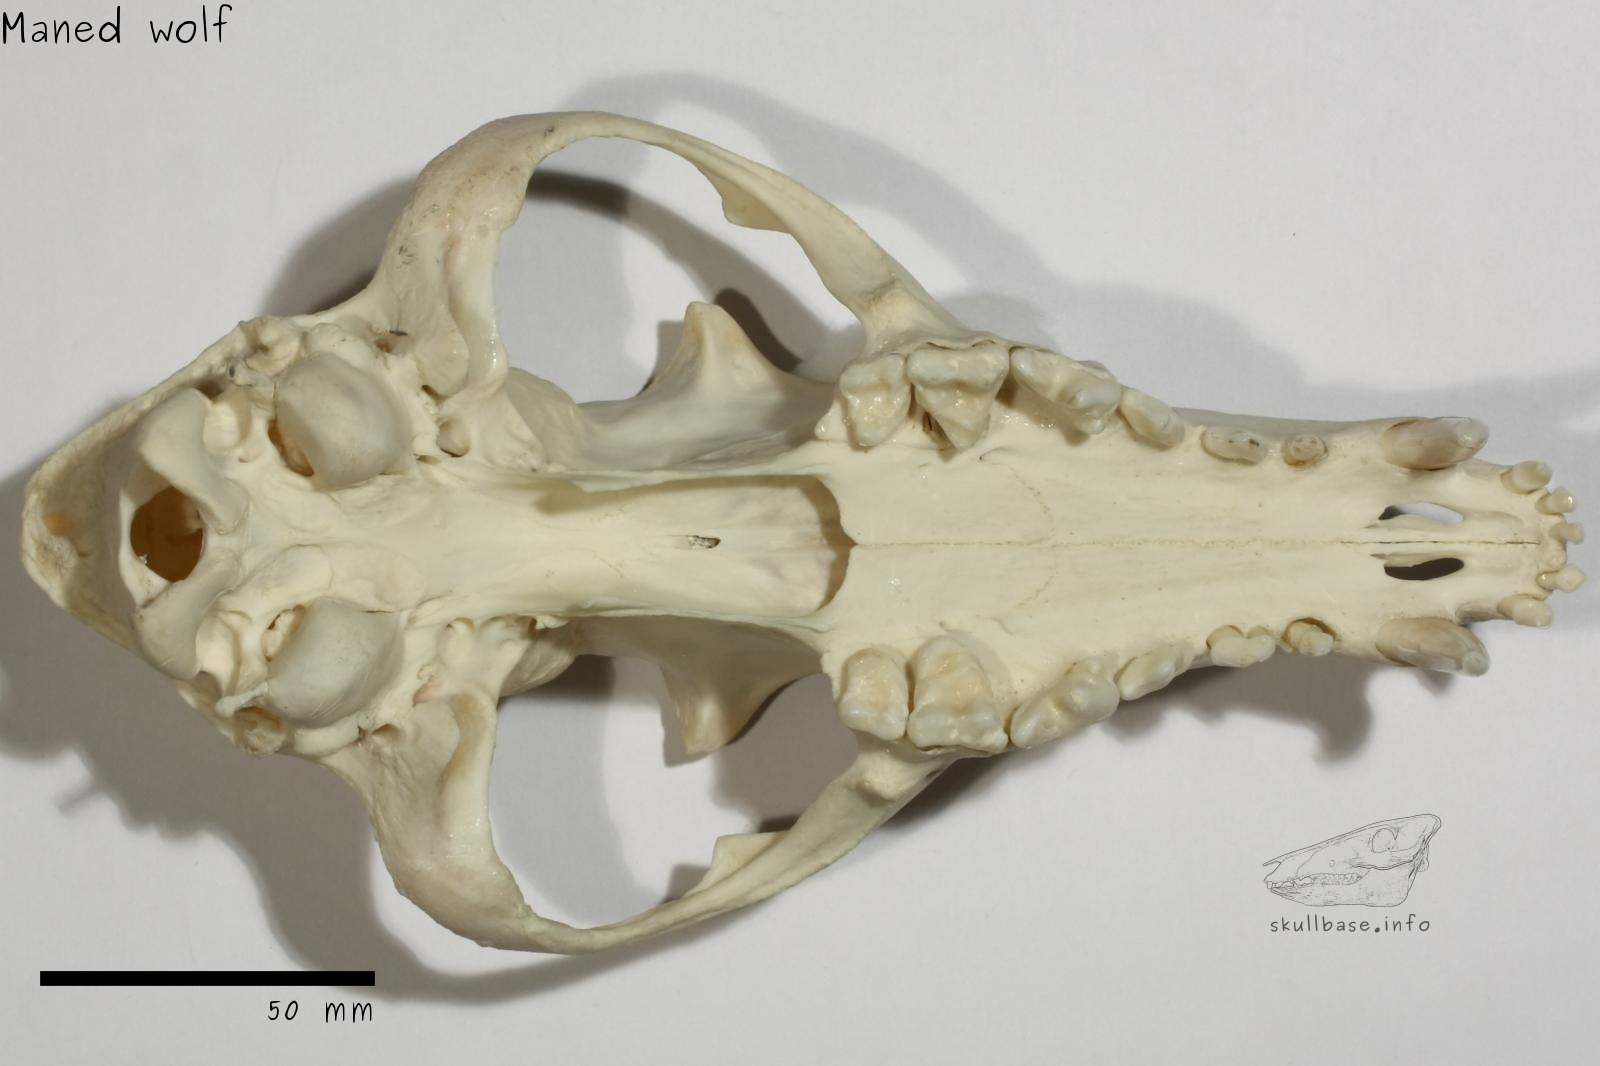 Maned wolf (Chrysocyon brachyurus) skull ventral view